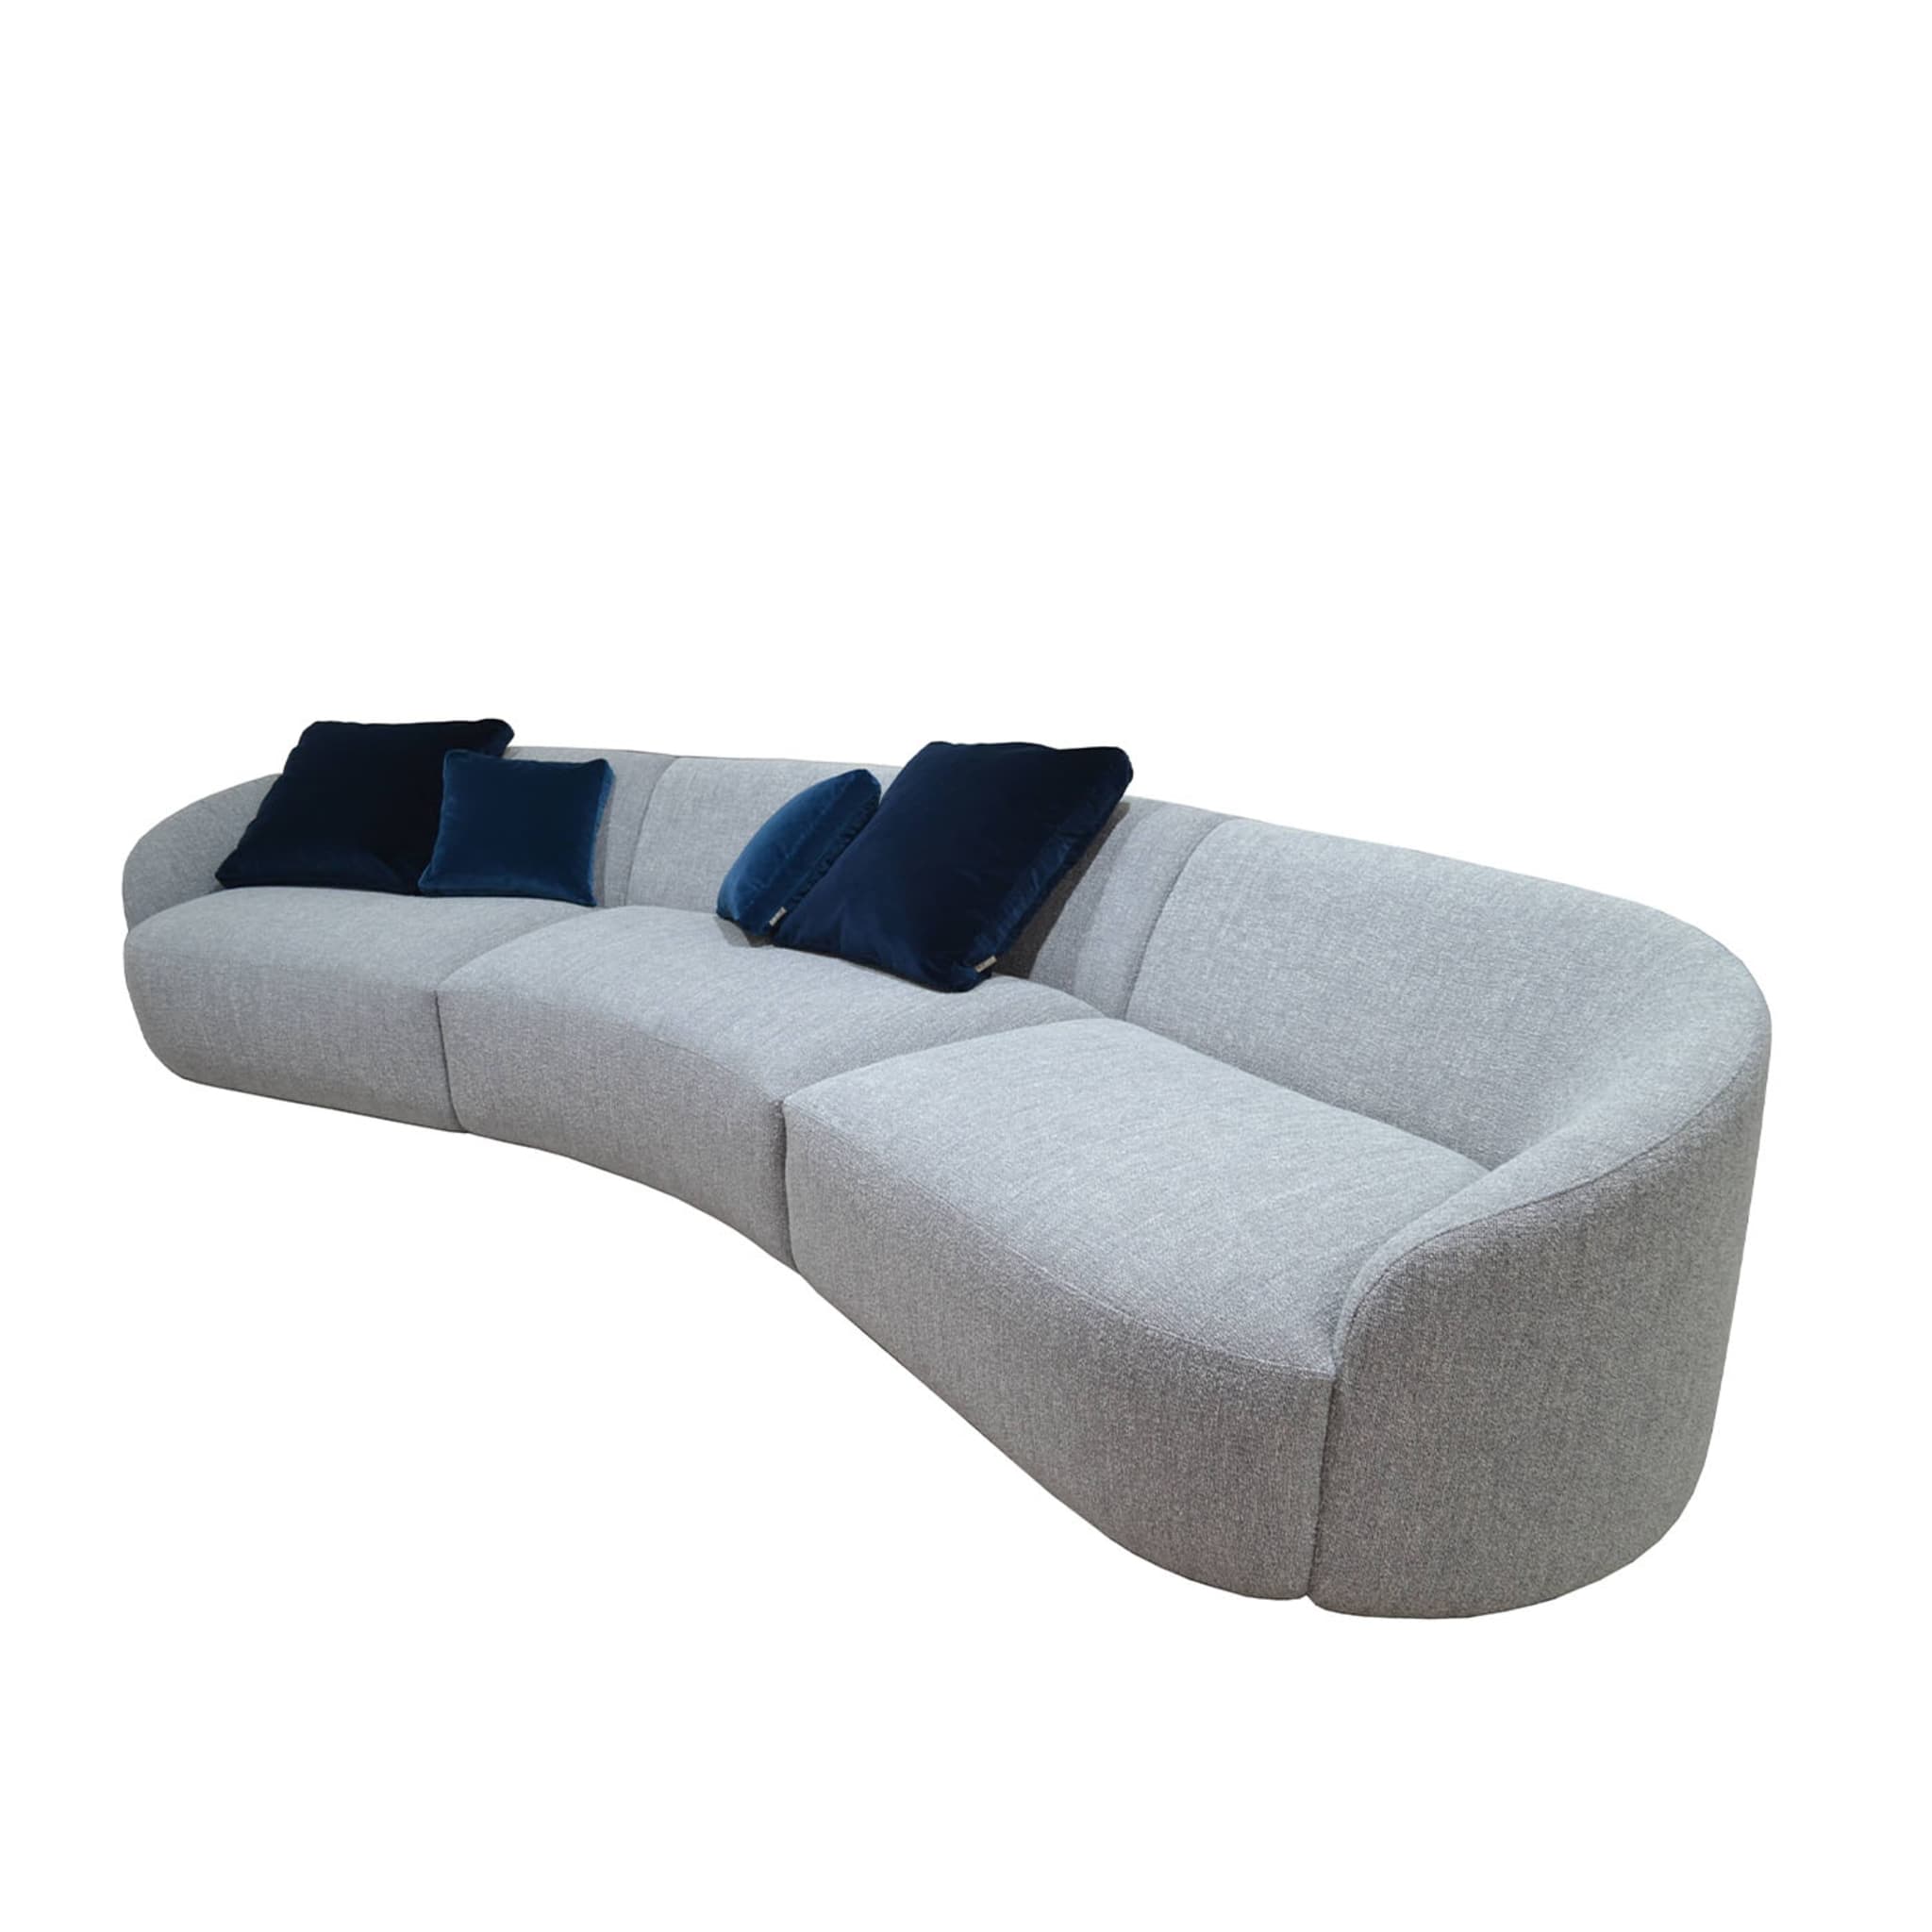 Cottonflower Modular Sofa in Torri Lana Grey Boucle - Alternative view 1